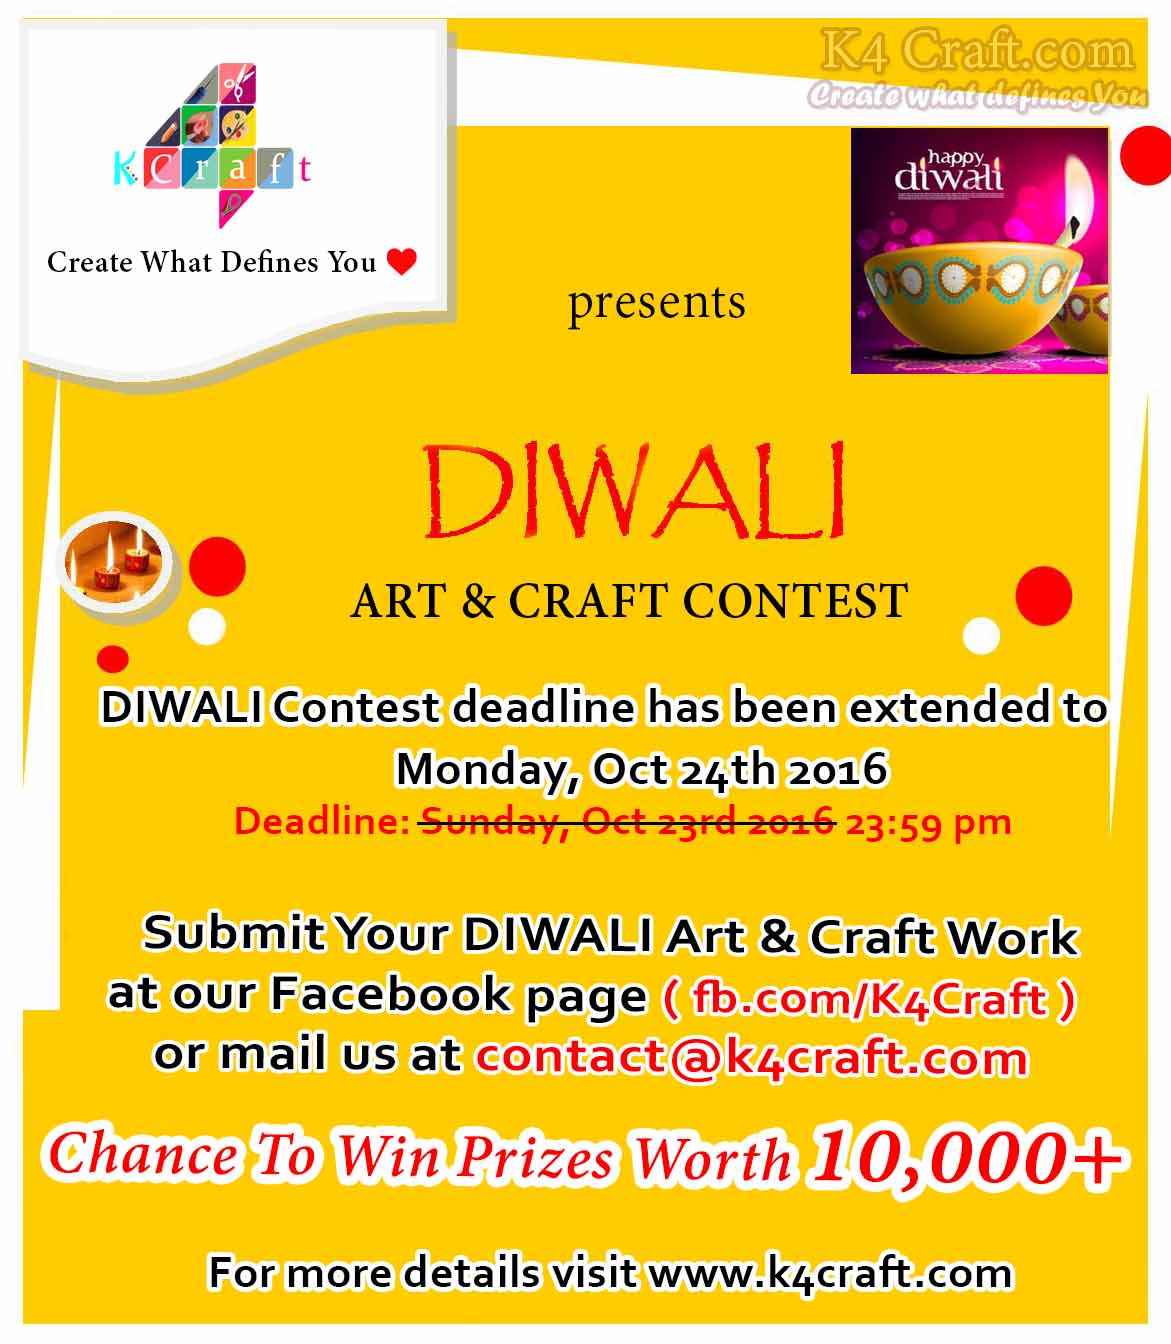 diwali-art-and-crfat-contest-k4craft1